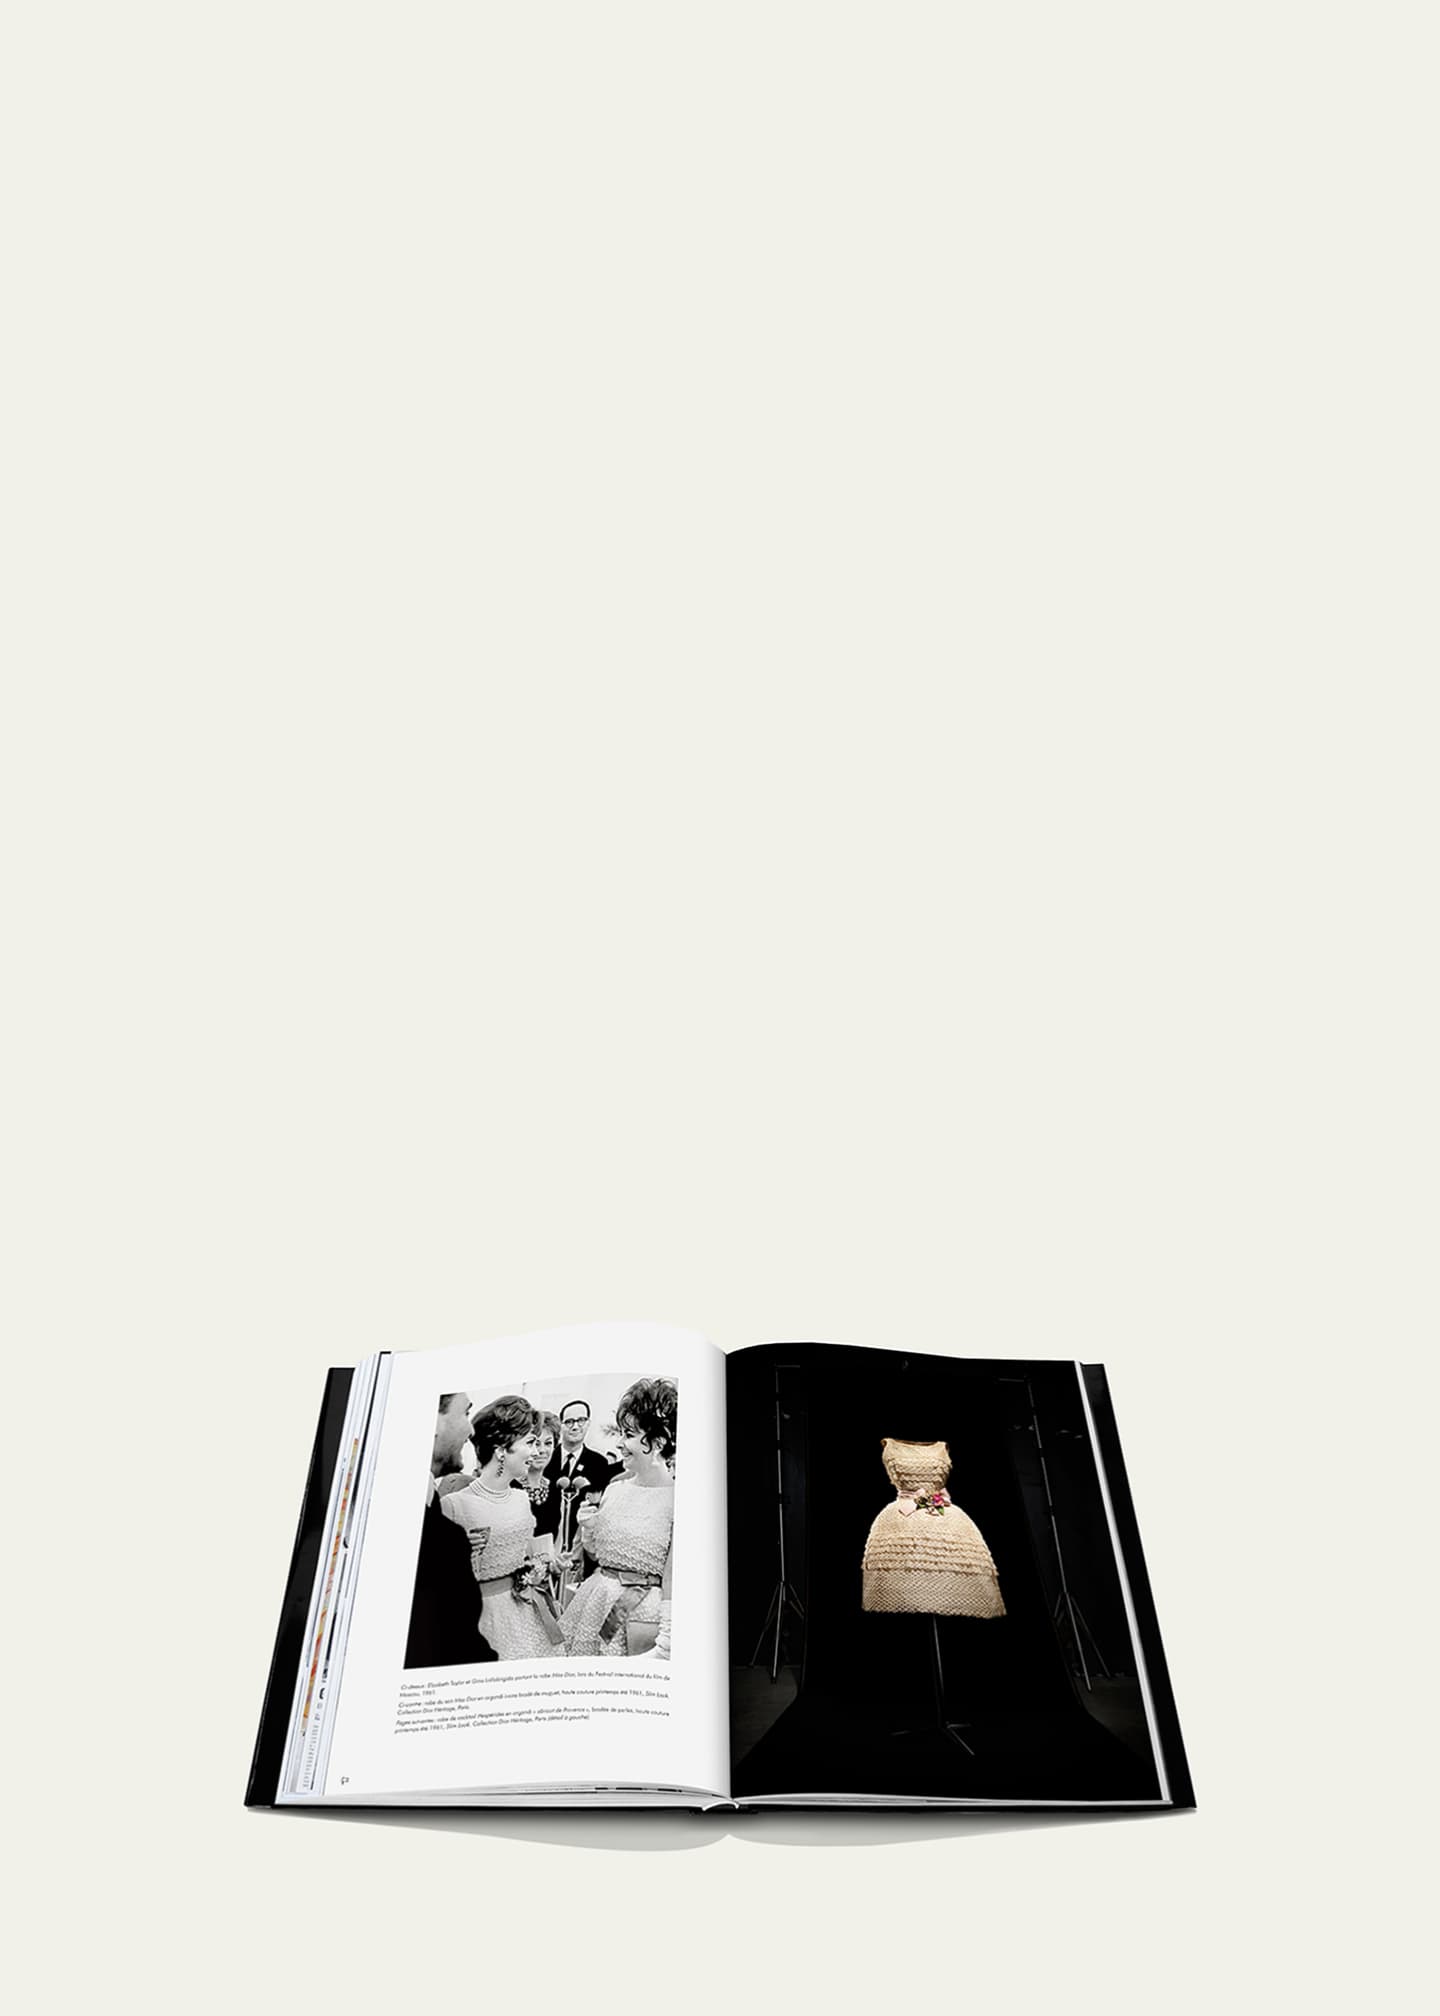 Assouline Dior Book by Marc Bohan Image 4 of 4